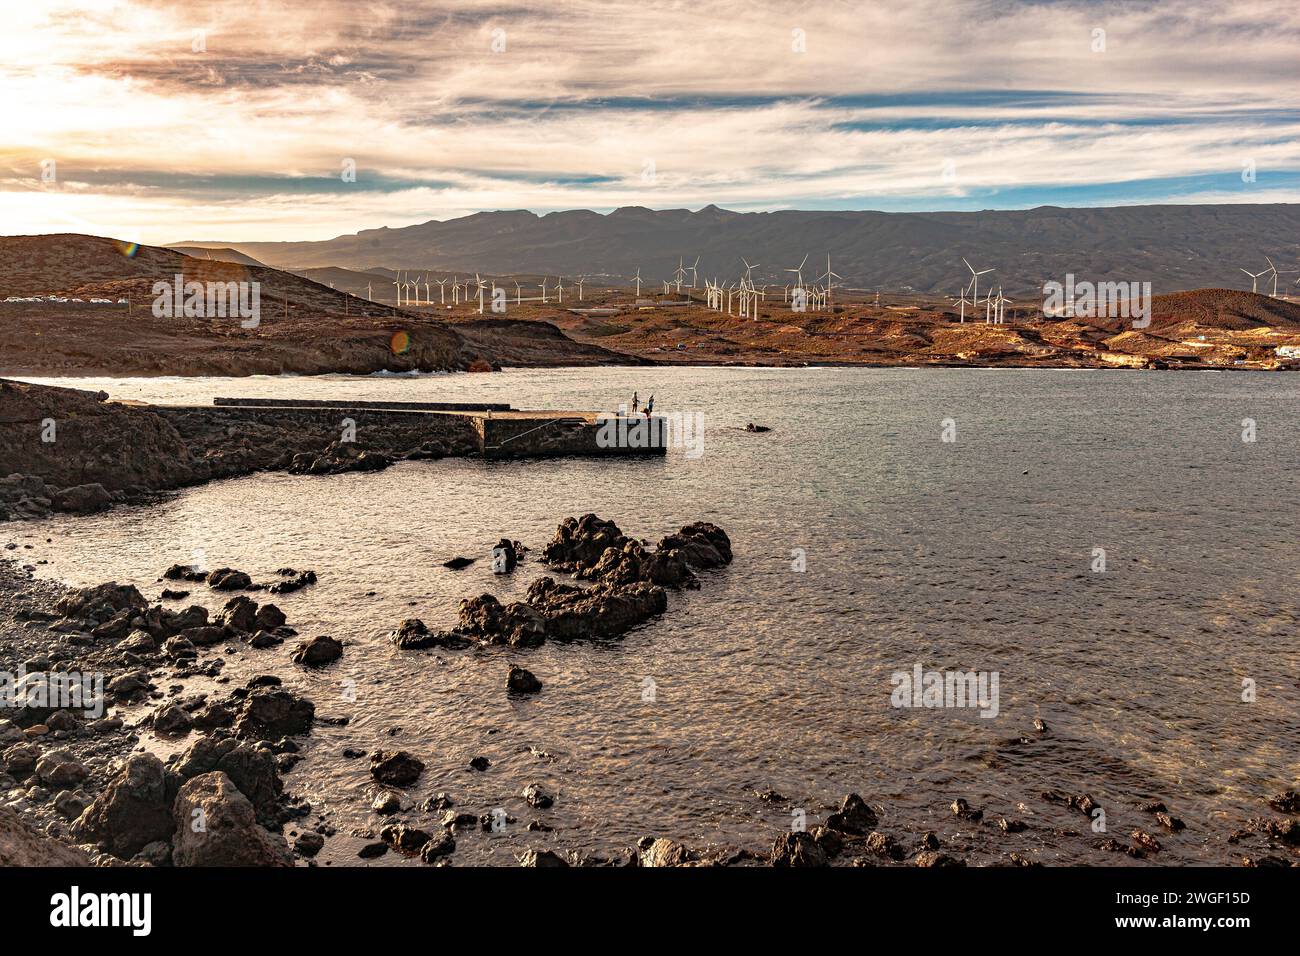 coastline of Porís de Abona (Tenerife island) Stock Photo